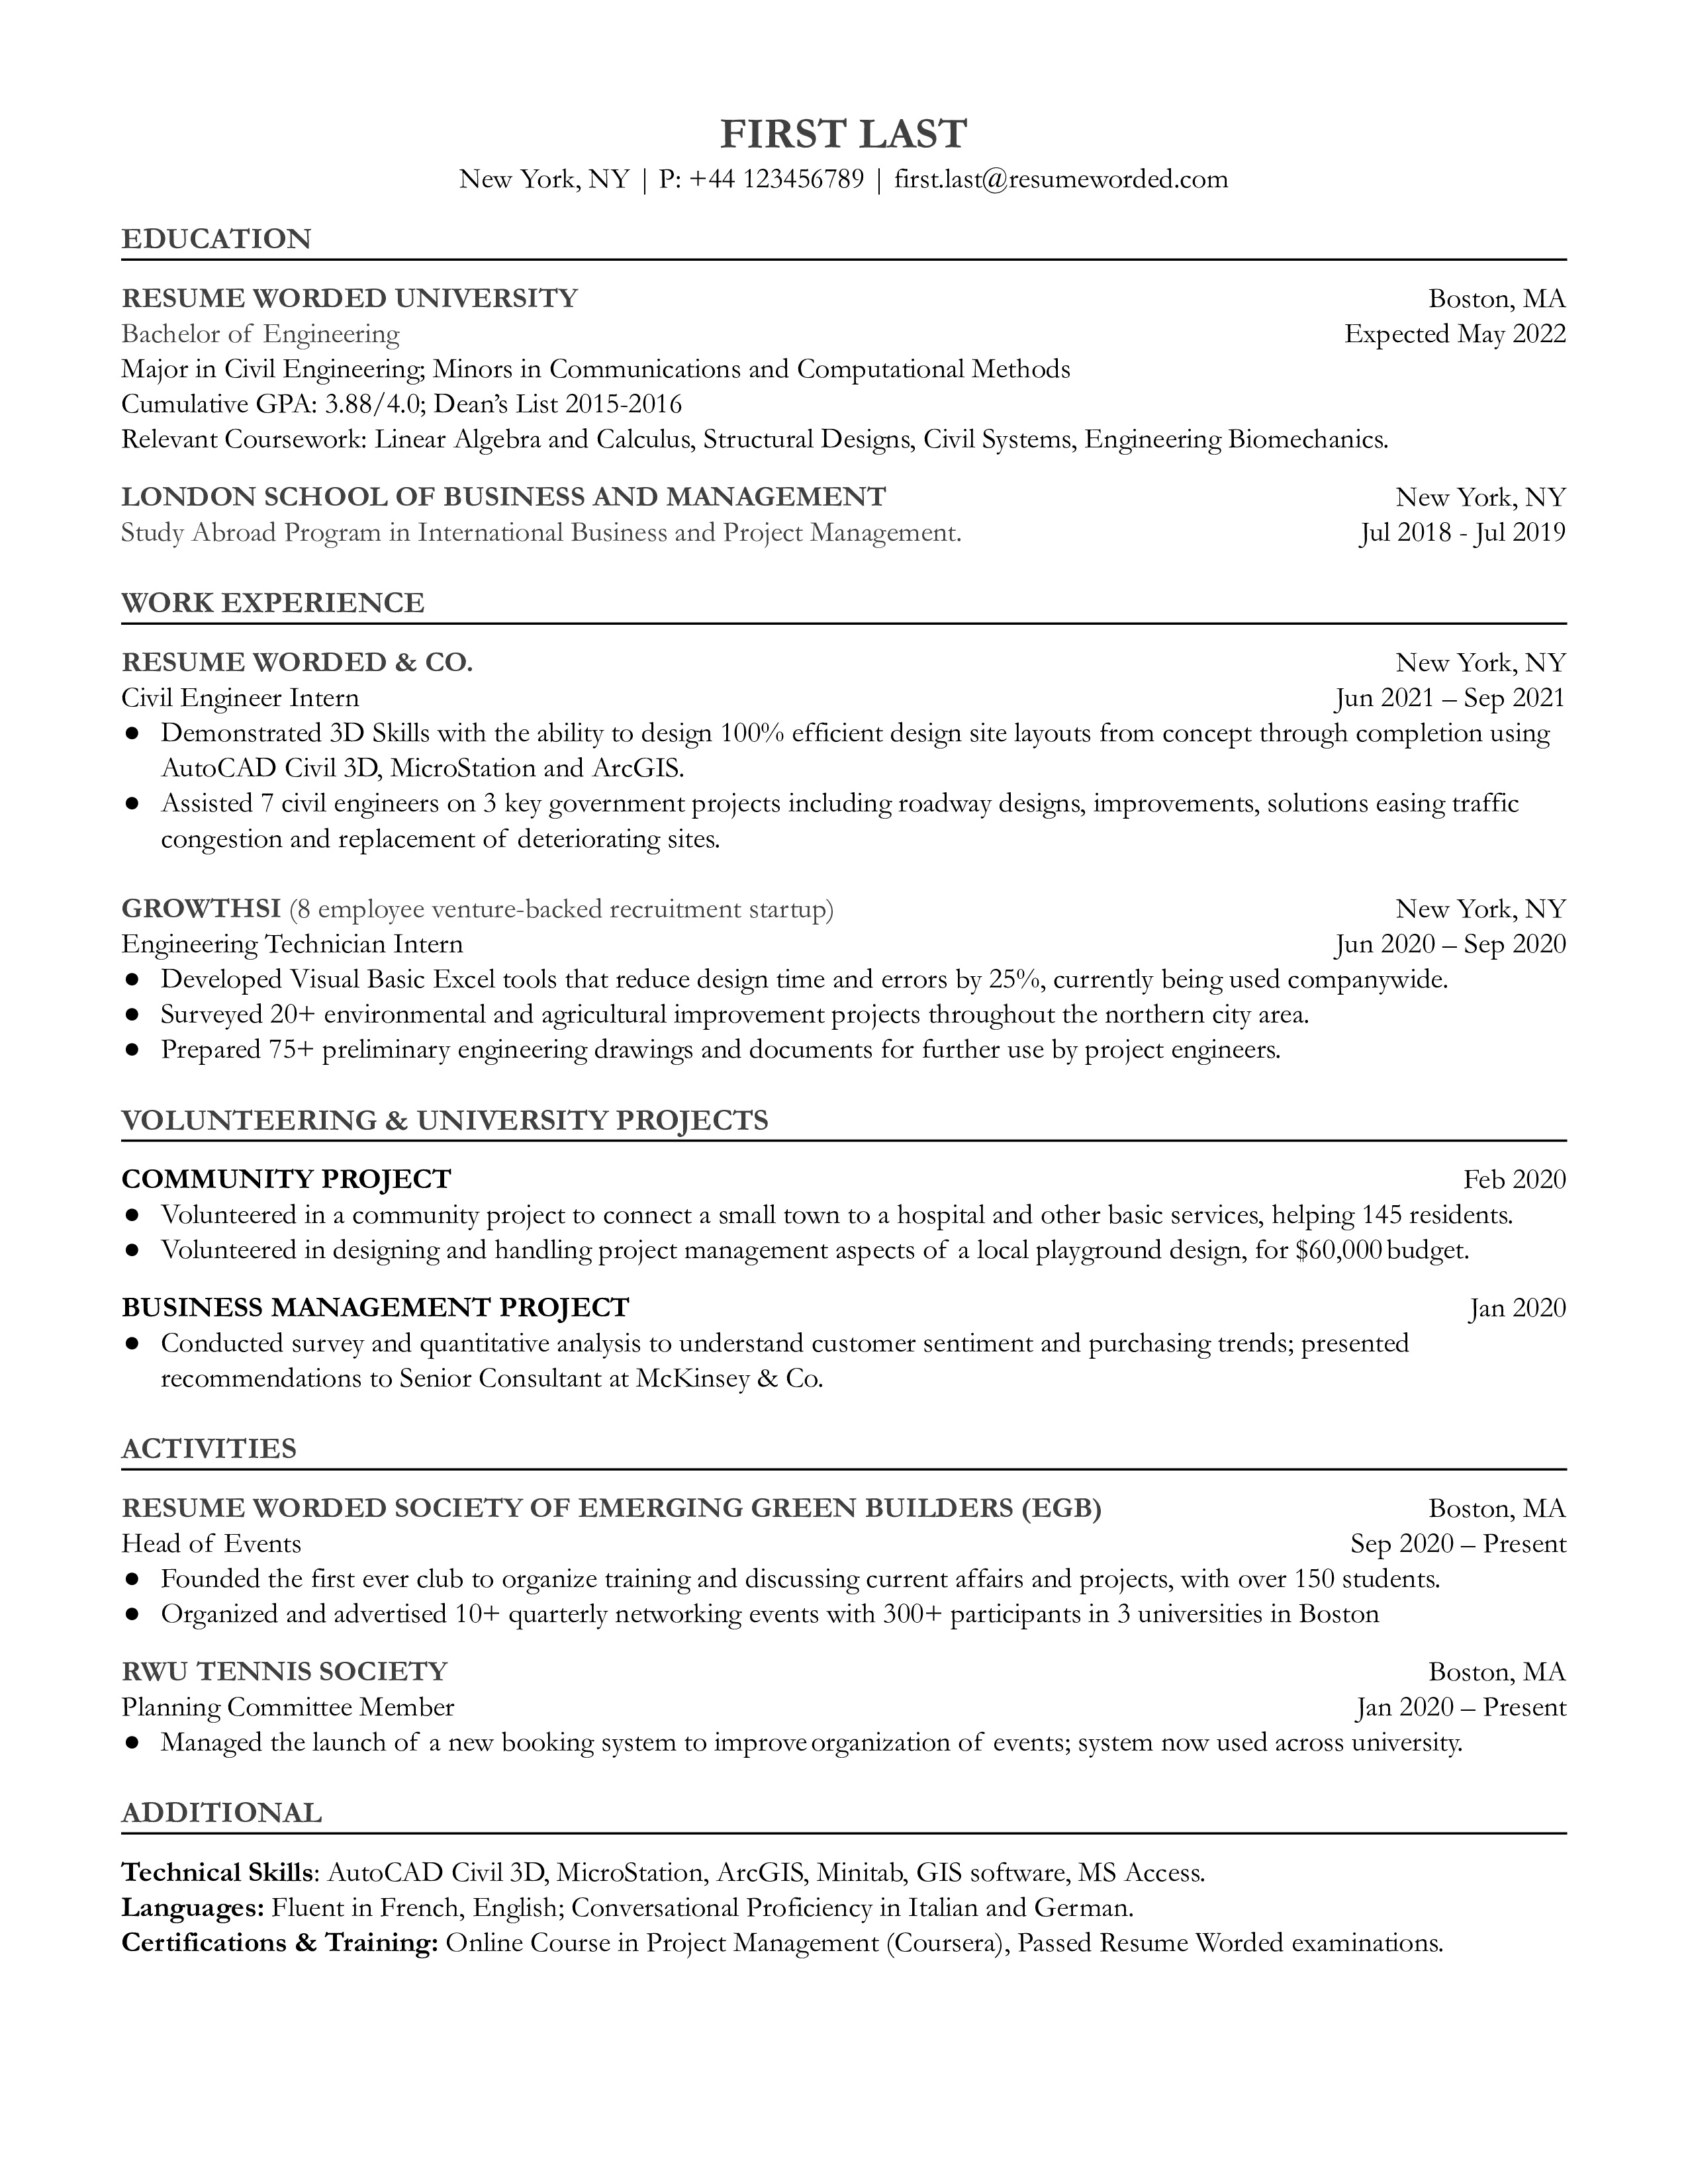 resume for entry level civil engineer